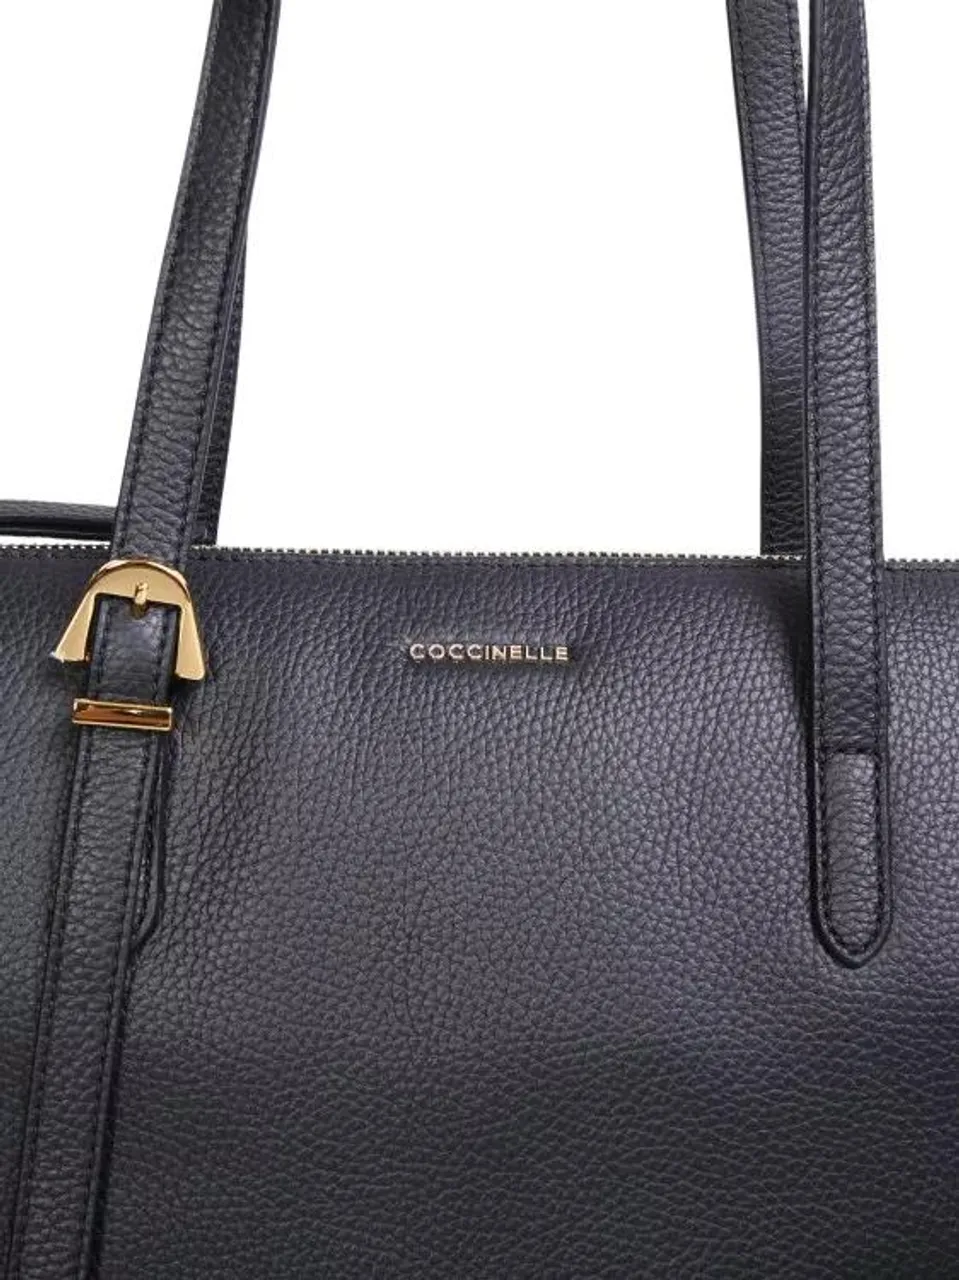 Coccinelle Shopping Bags - Coccinelle Gleen Schwarze Leder Shopper E1N1511030 - black - Shopping Bags for ladies